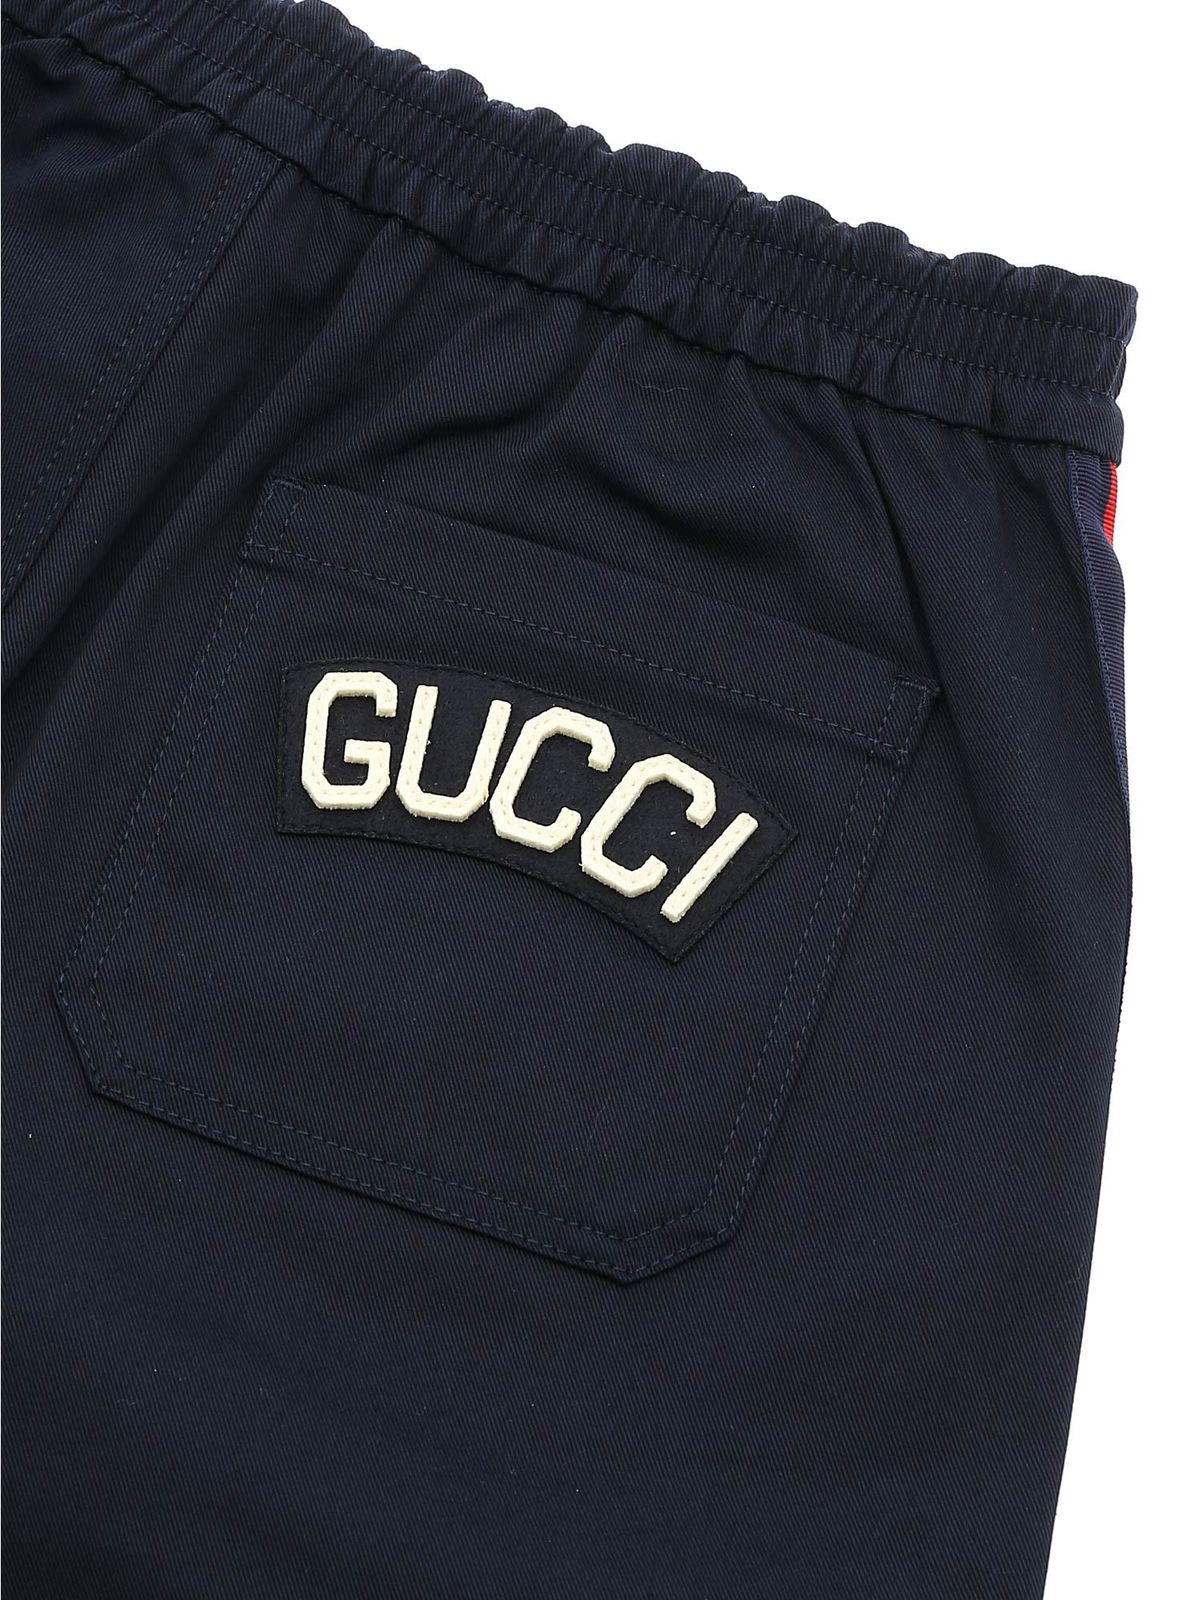 Shorts Gucci - Shorts - Blau - 600269XWAEW4265 | iKRIX Shop online